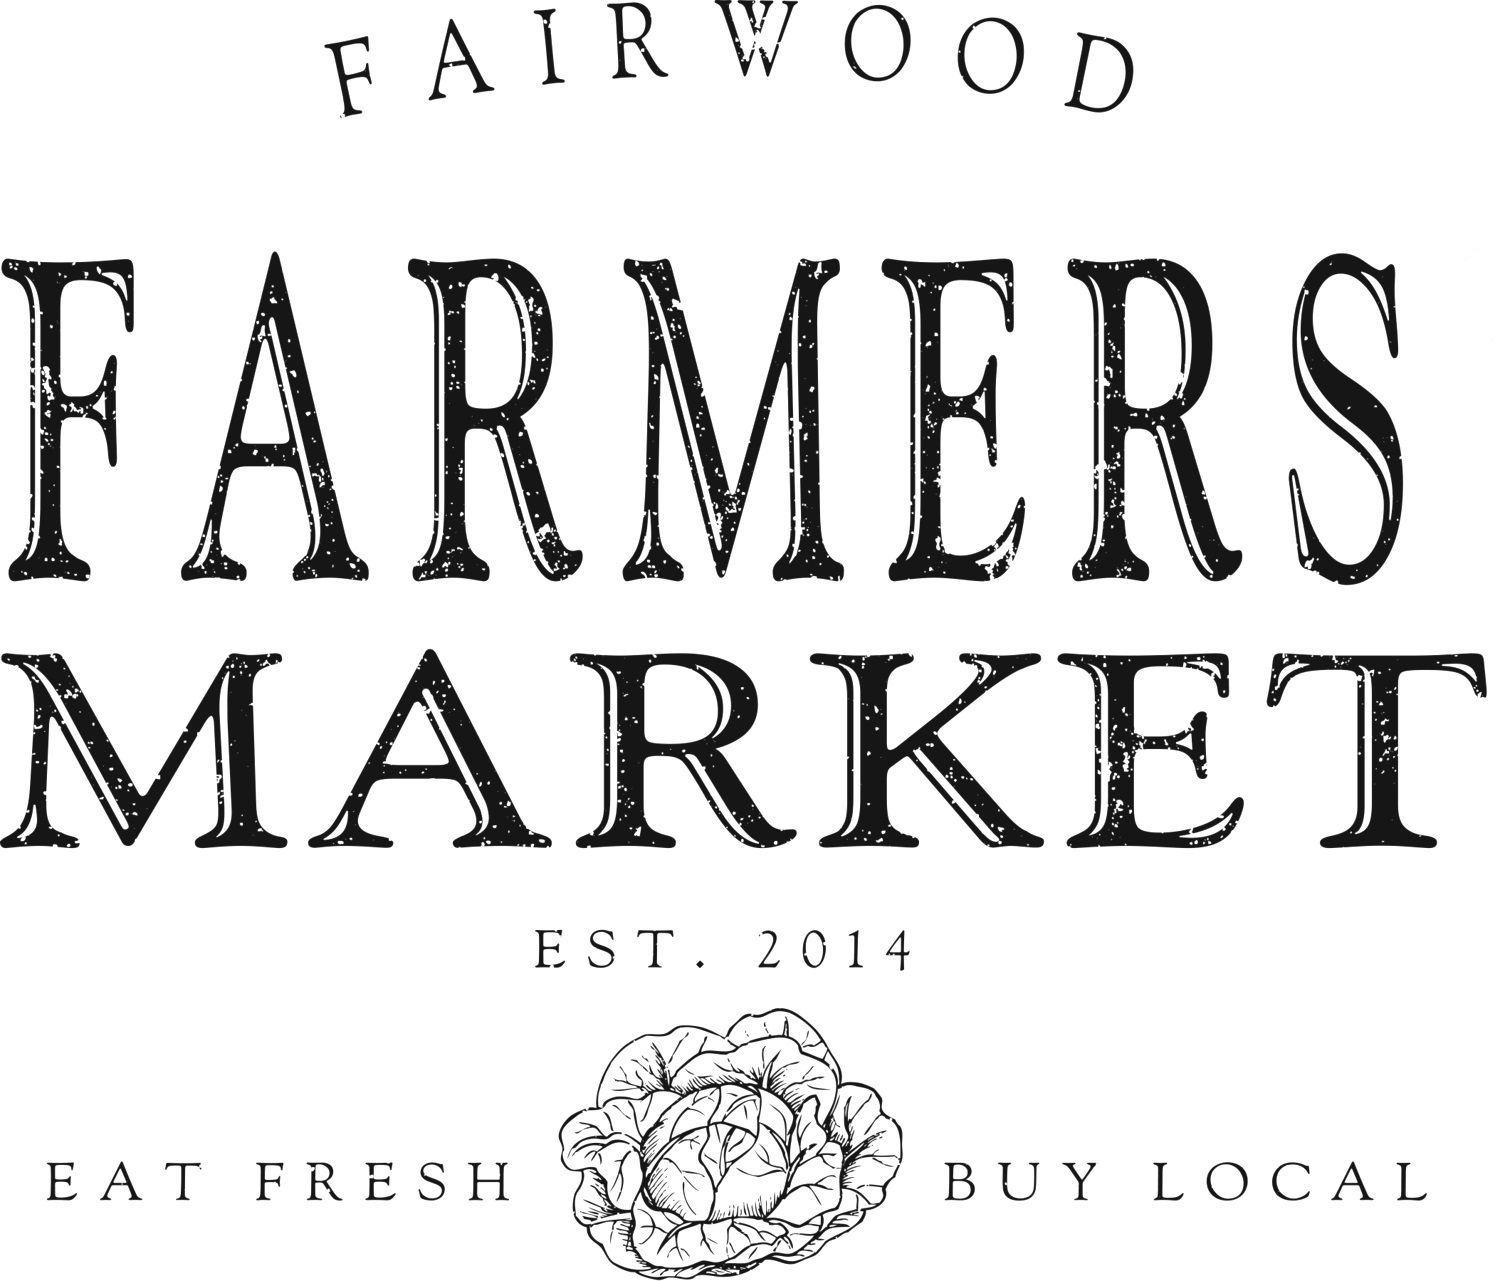 Fairwood Farmers Market